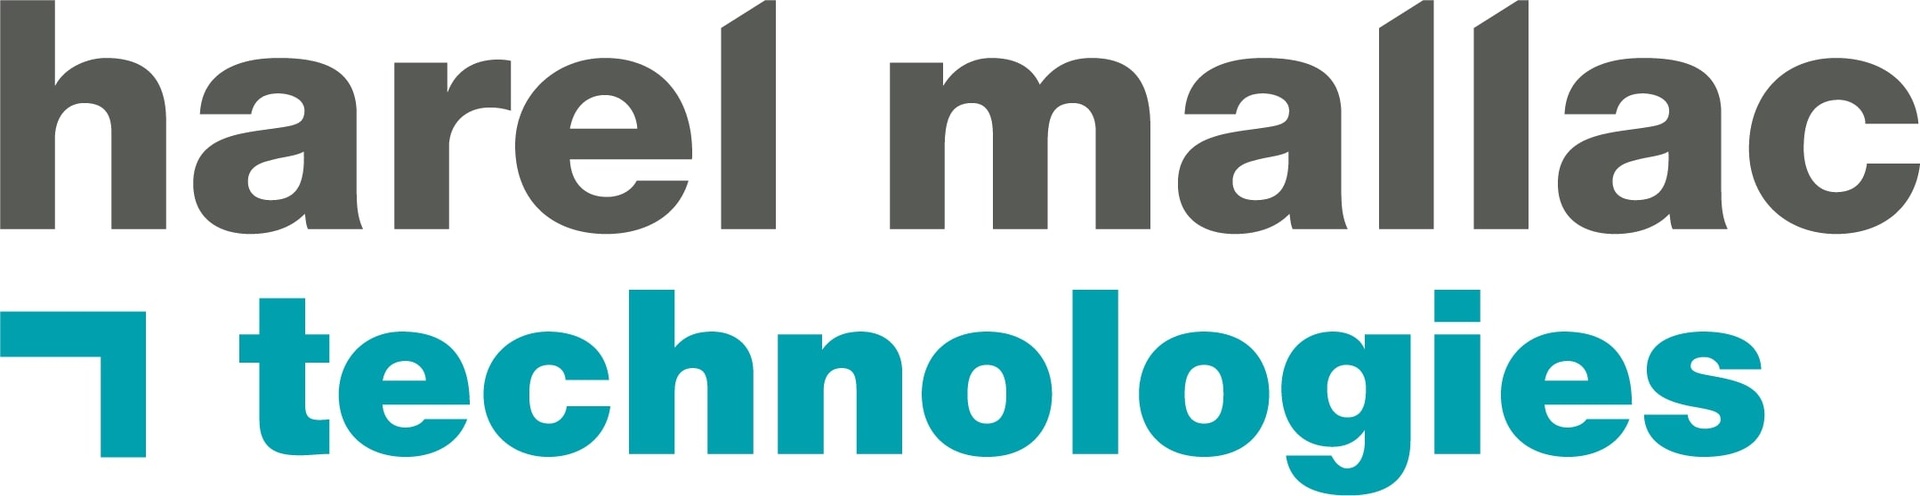 Harel Mallac Technologies Ltd